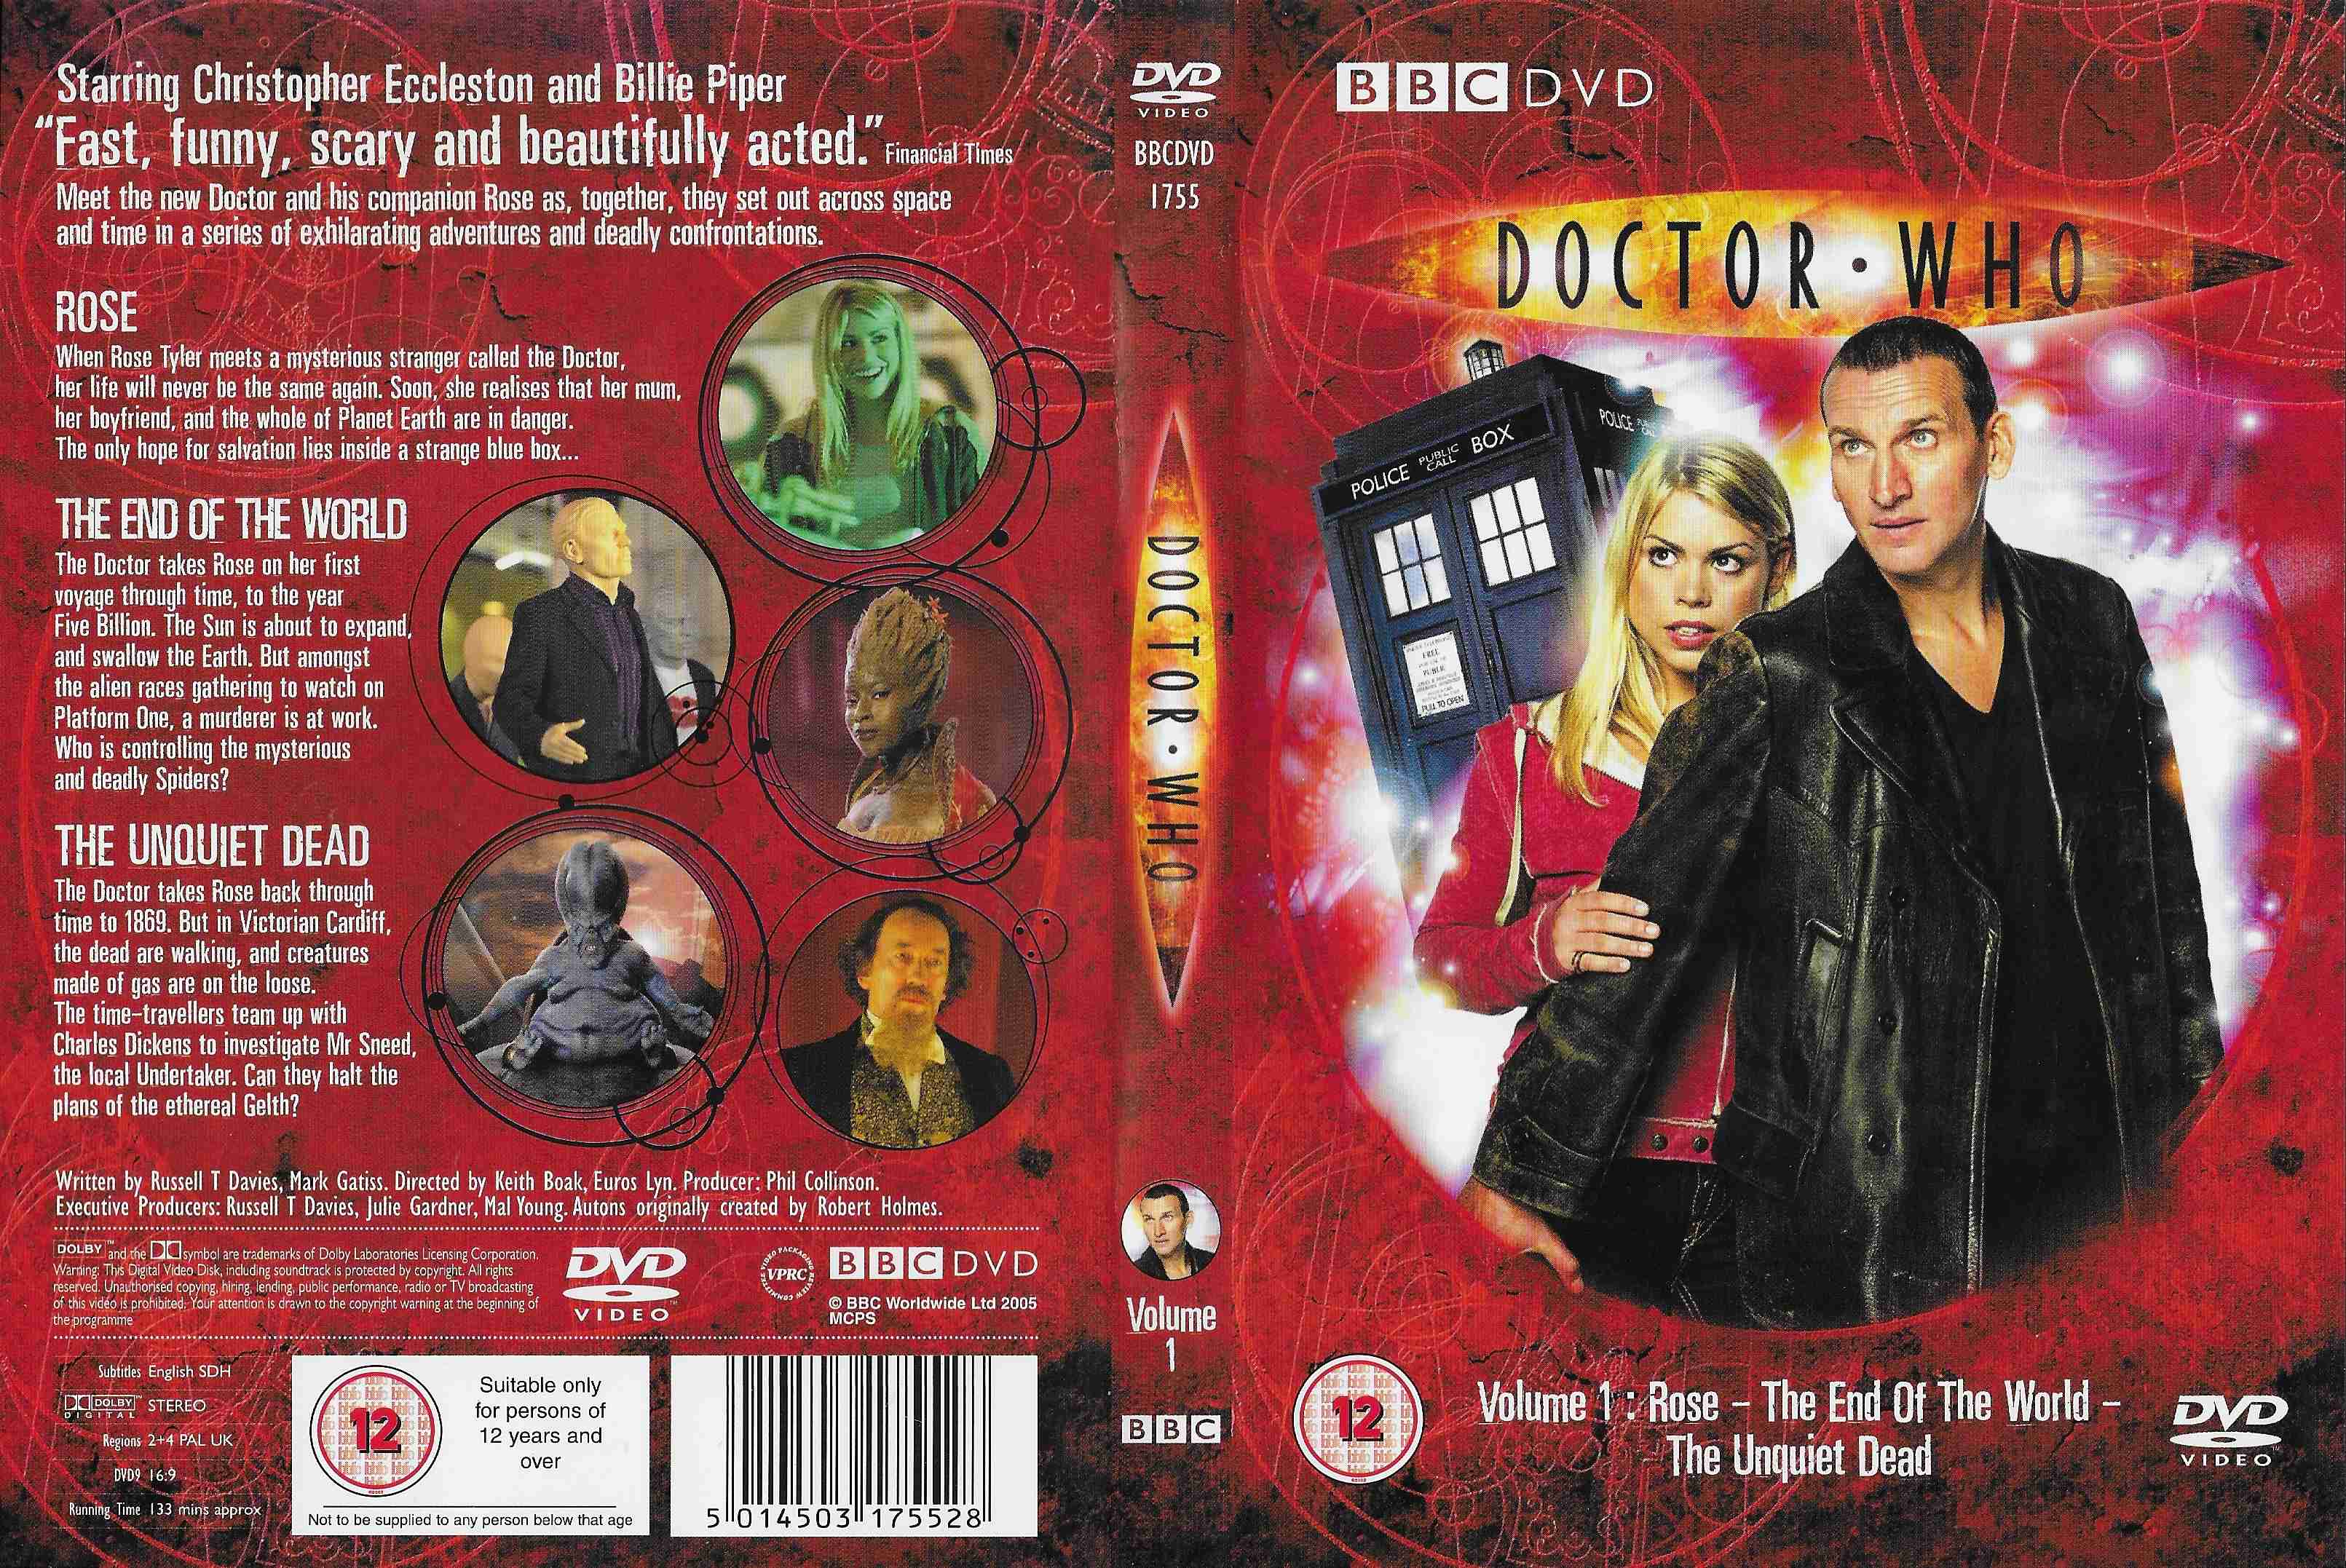 Back cover of BBCDVD 1755